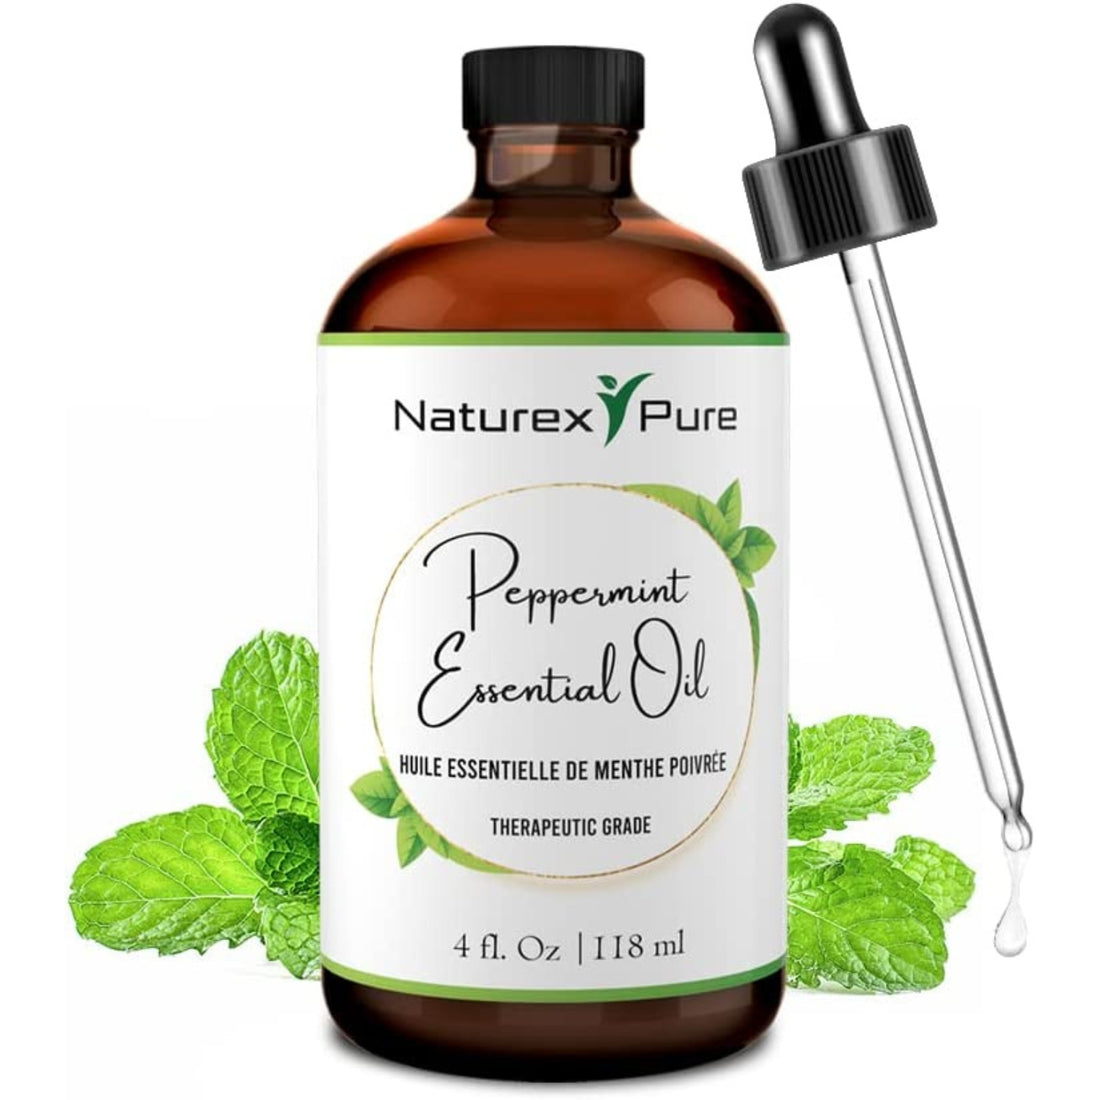 Peppermint Oil, Explore Natural Essential Oils